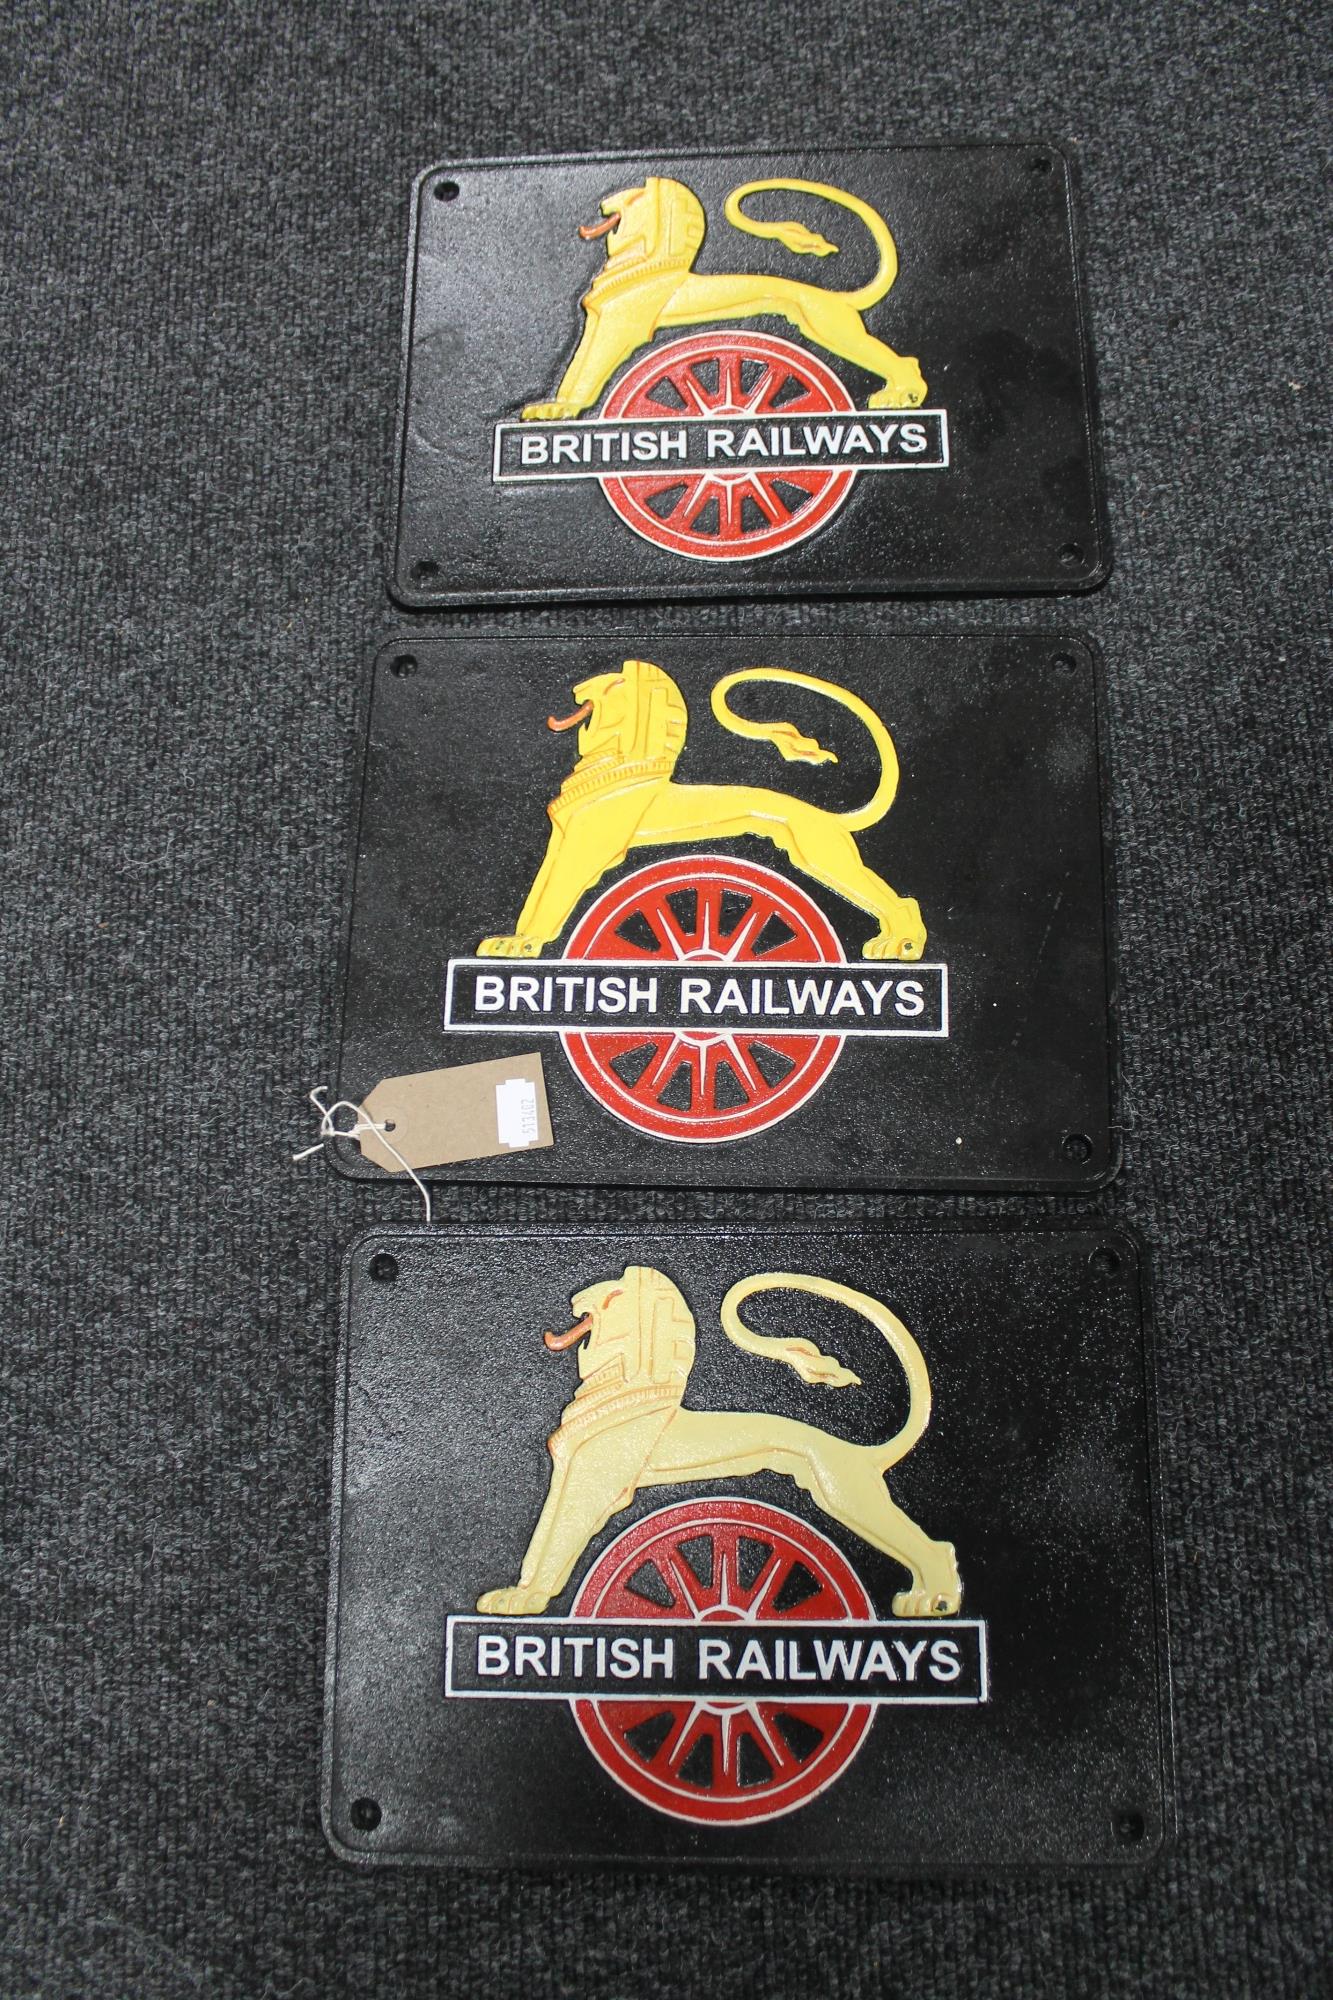 Three cast iron plaques - British Railways